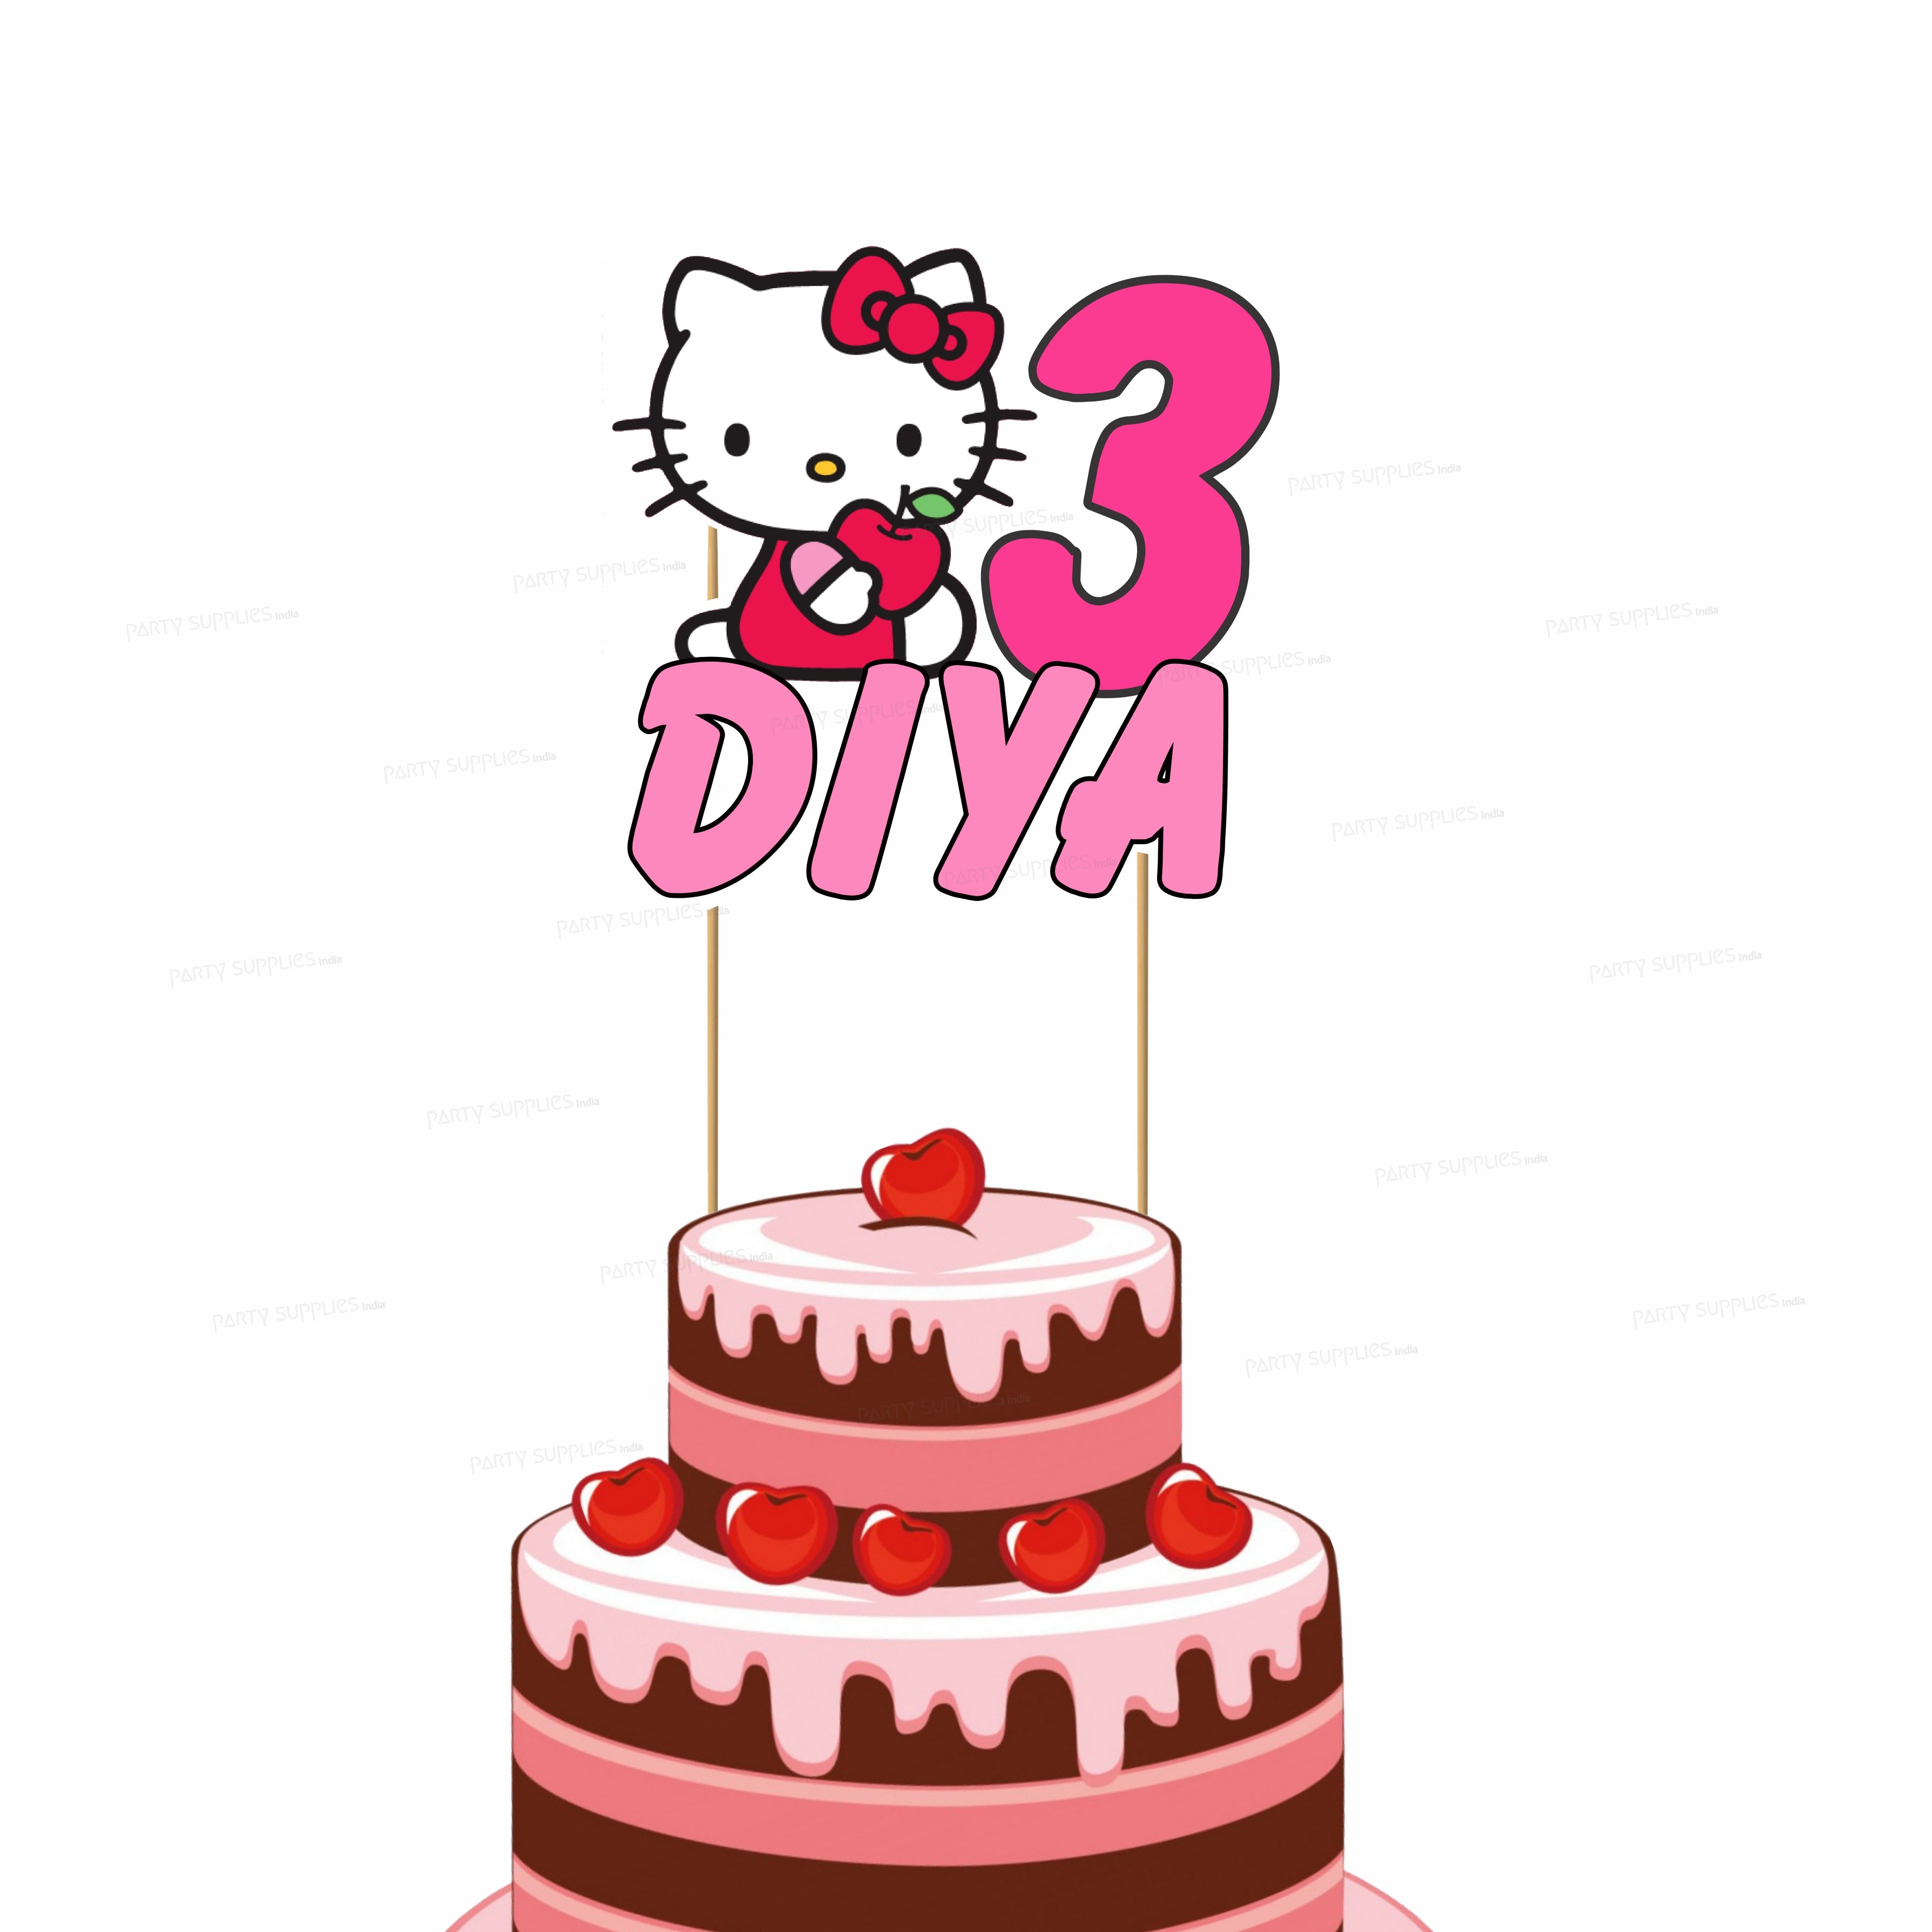 25pcs Hello Kitty Cake Decorations with 1pcs Hello Kitty Cake Topper, 24pcs Cupcake  Toppers for Kawaii Birthday Party Decorations : Amazon.co.uk: Toys & Games